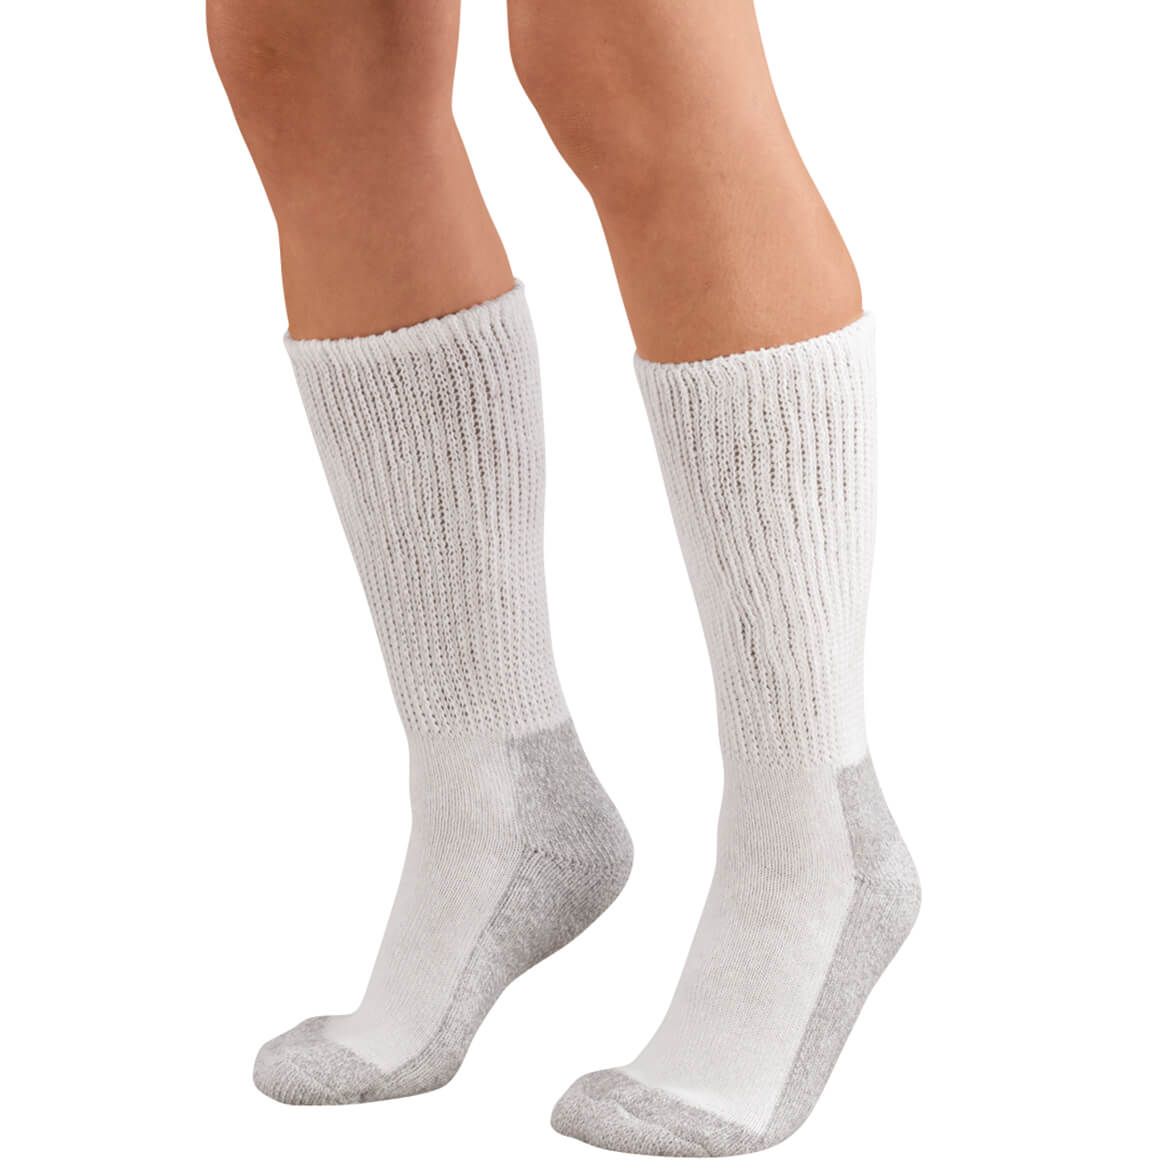 Men's Diabetic Socks - 2 Pair + '-' + 304498